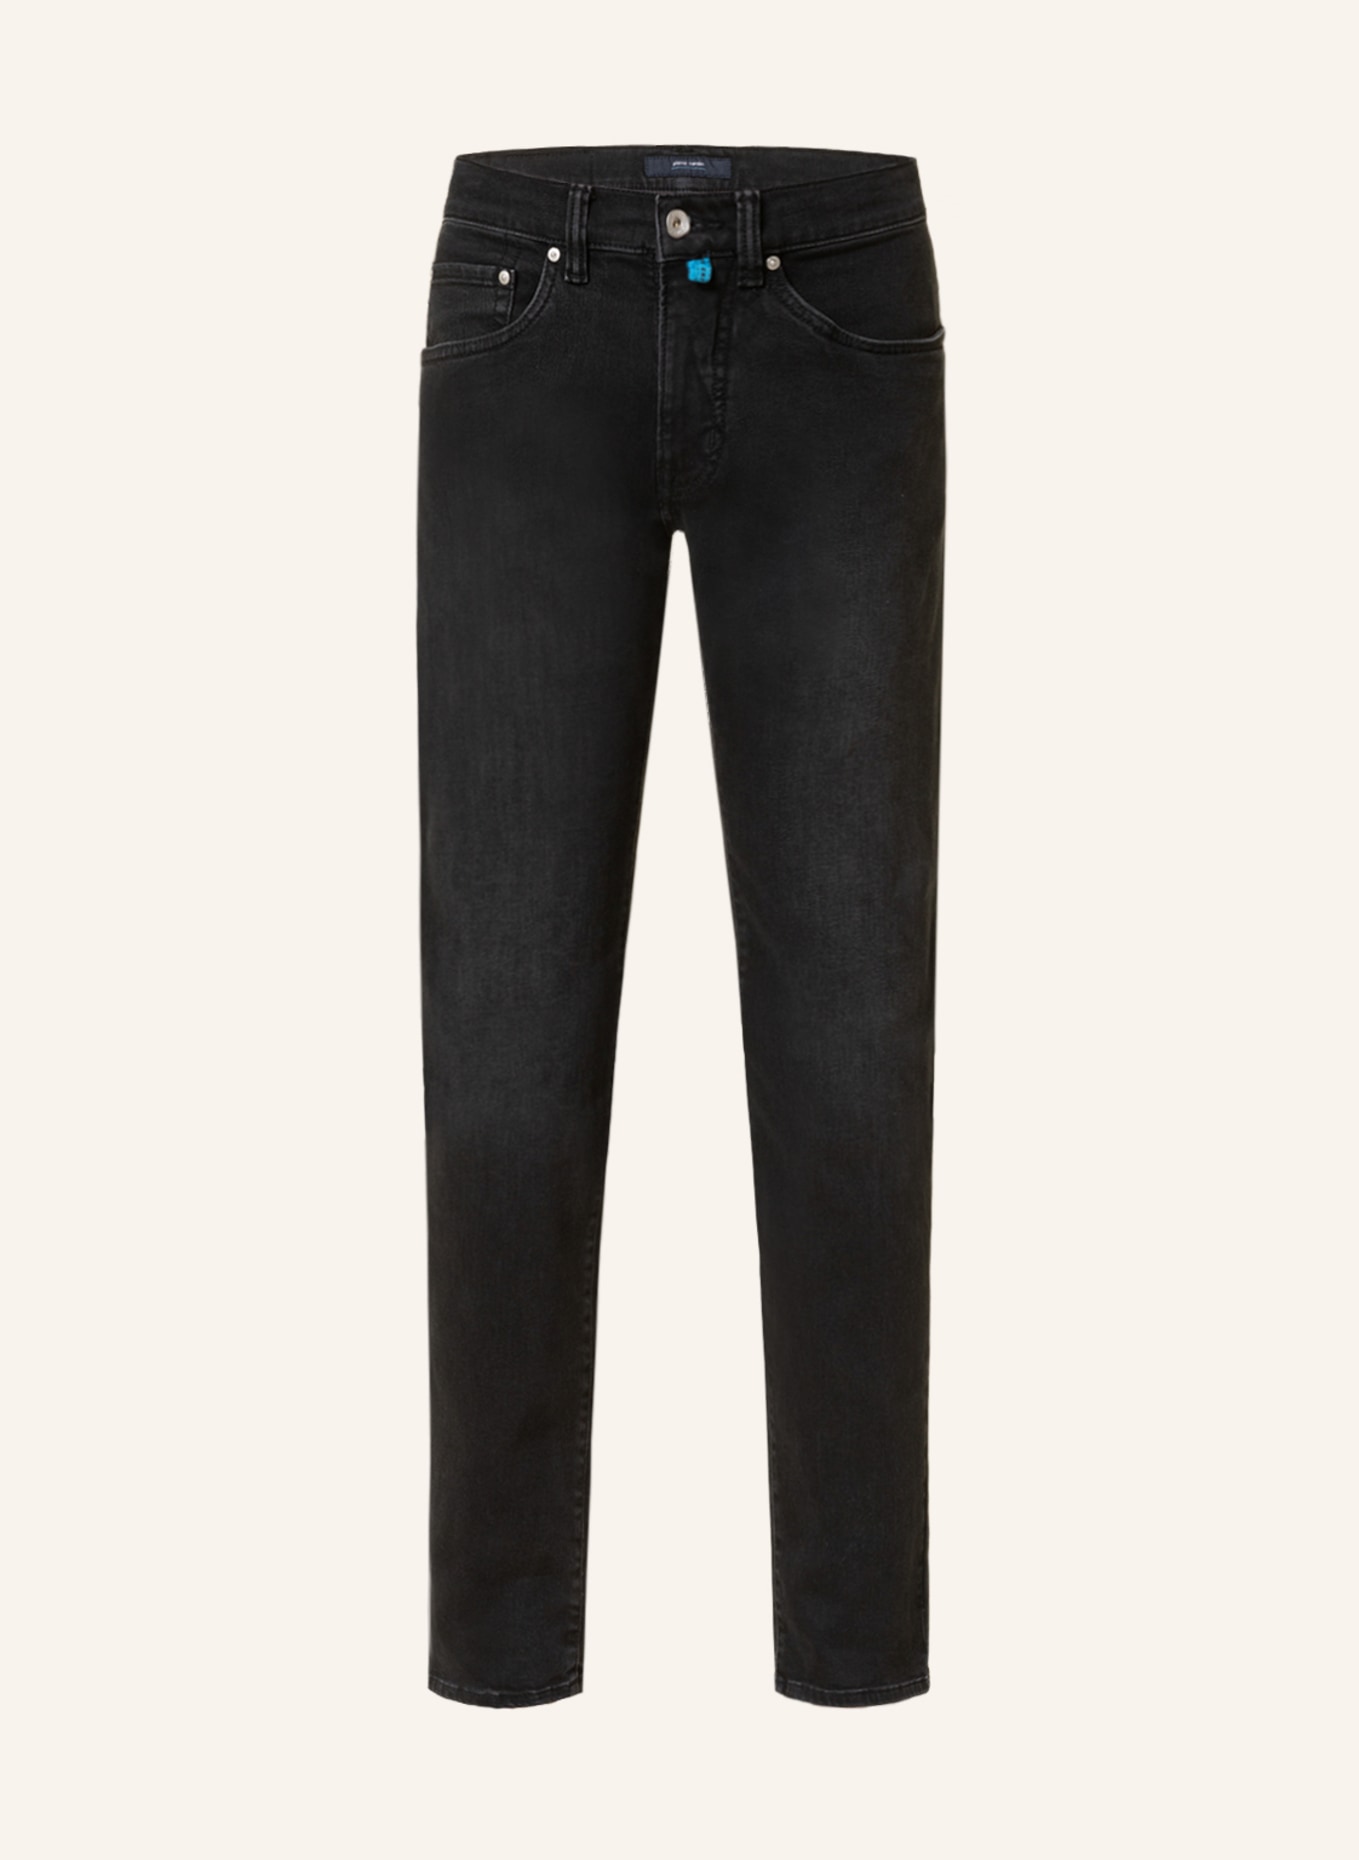 pierre cardin Jeans ANTIBES Slim Fit, Farbe: 9802 black black used (Bild 1)